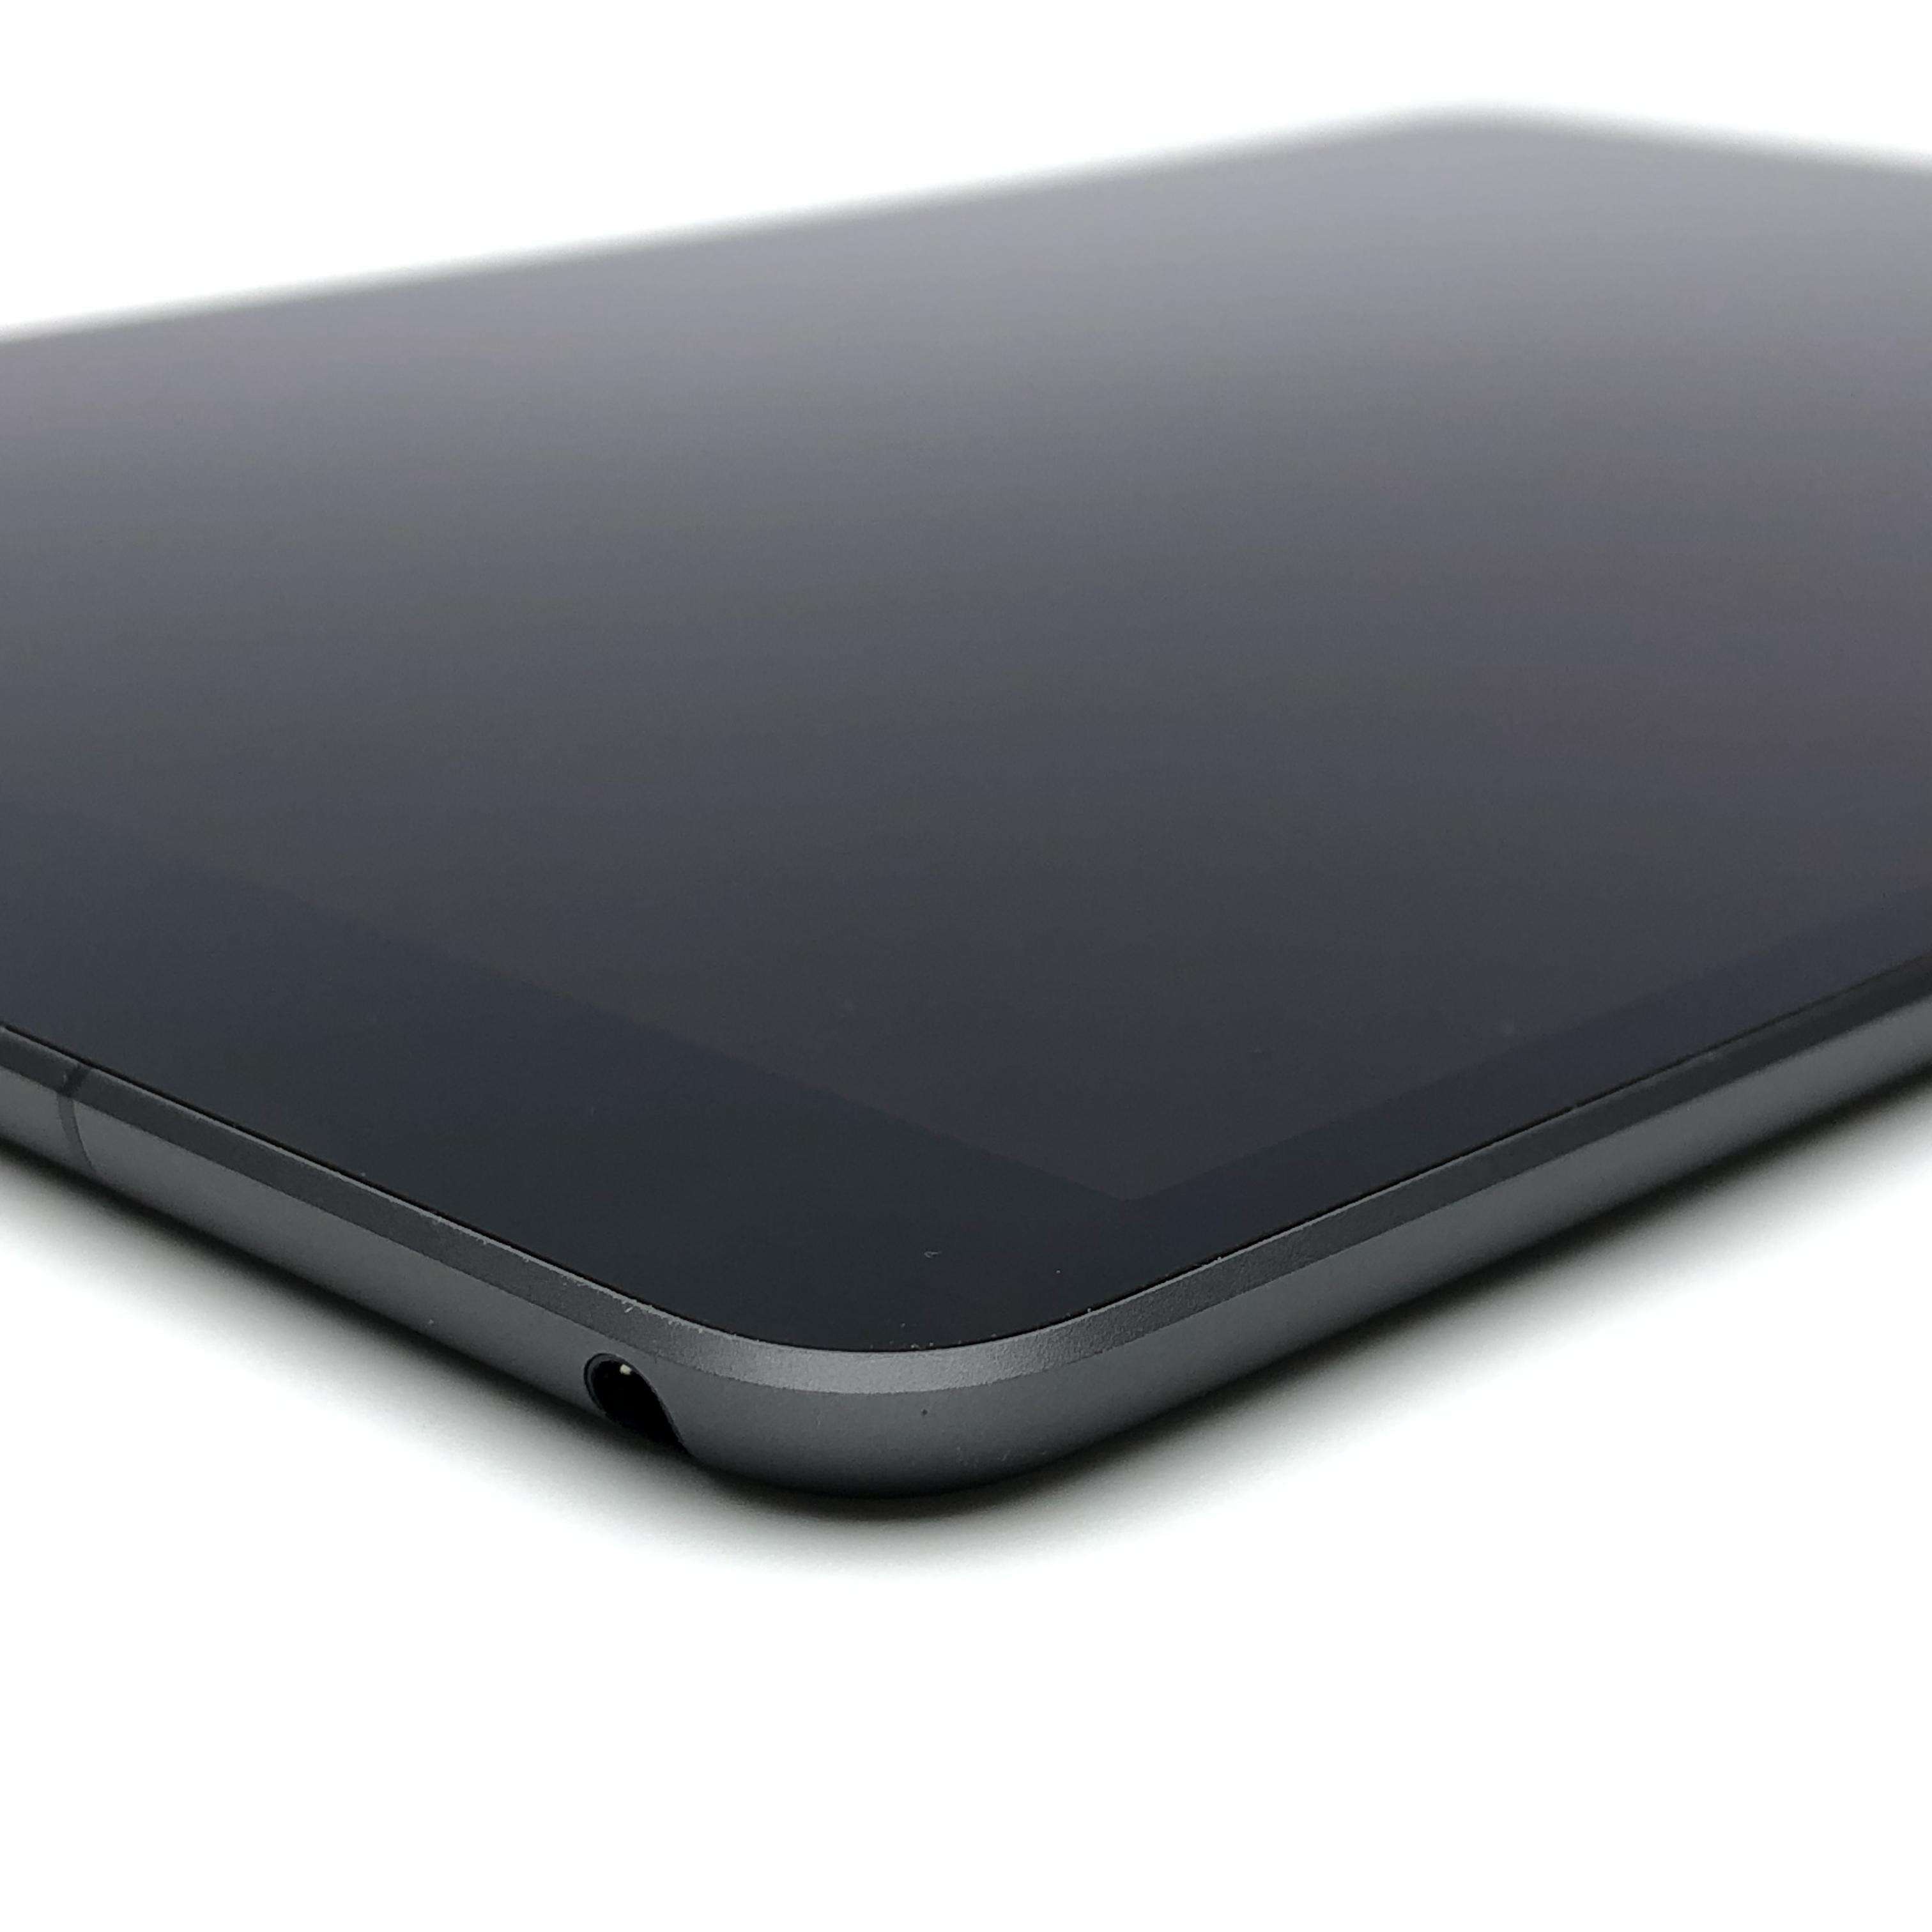 iPad mini 4 64 GB WiFi Cellular: характеристики и обзор планшета